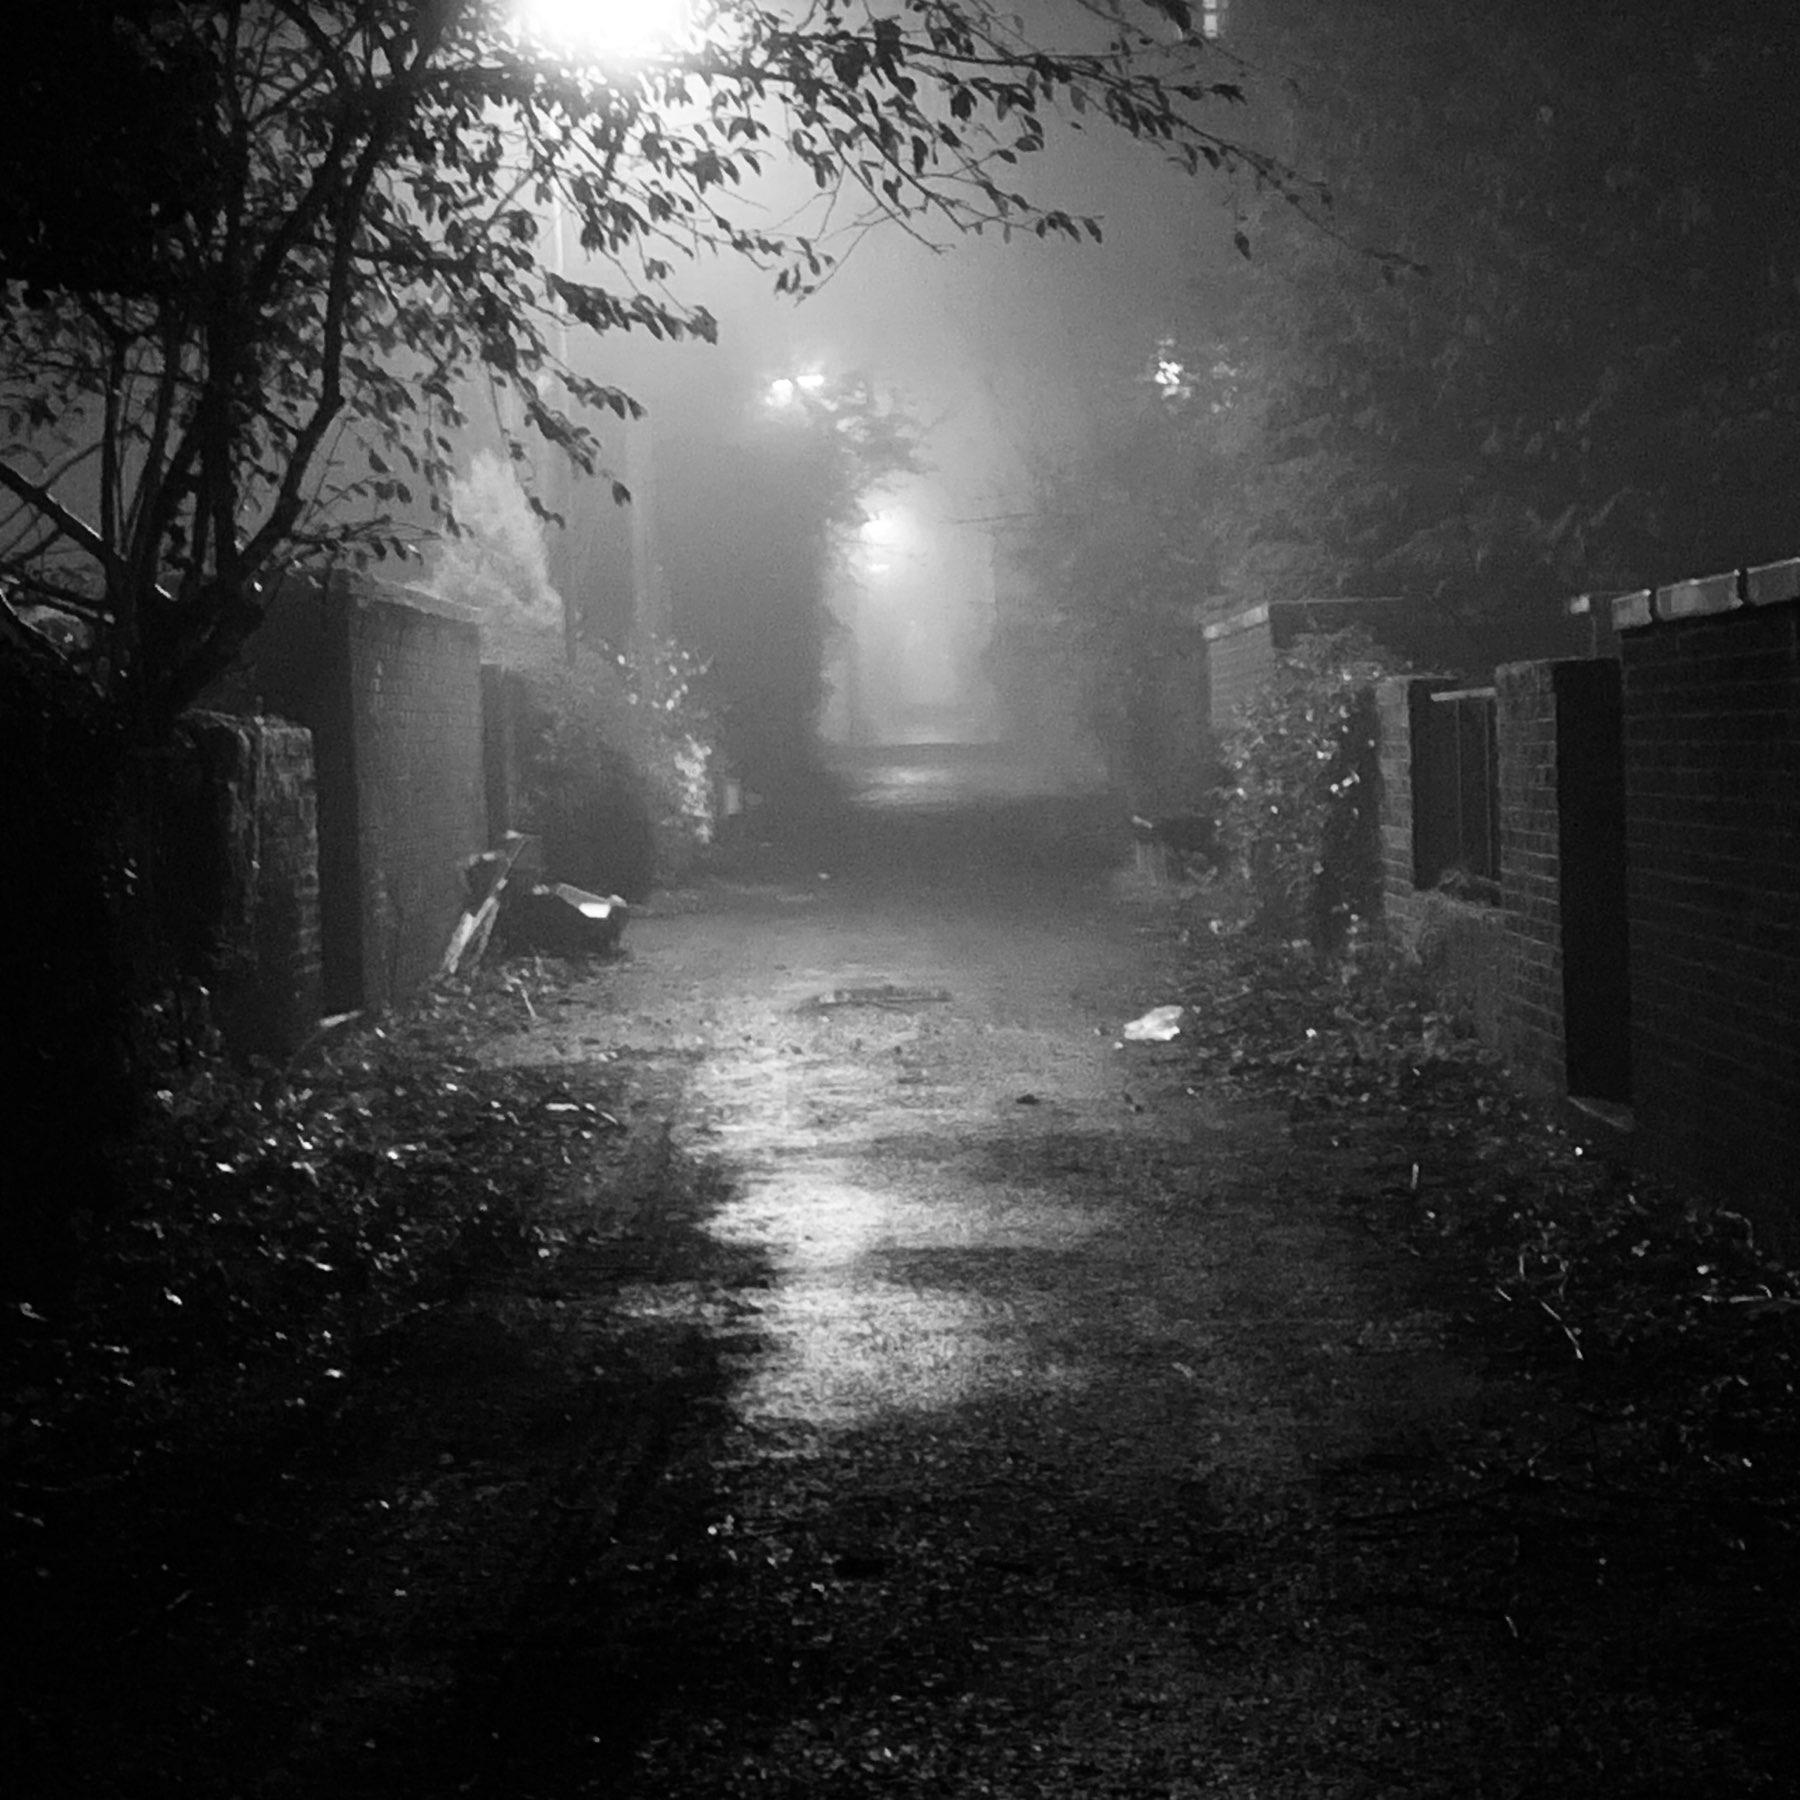 misty in bin lane at night. Broomhill Glasgow. 